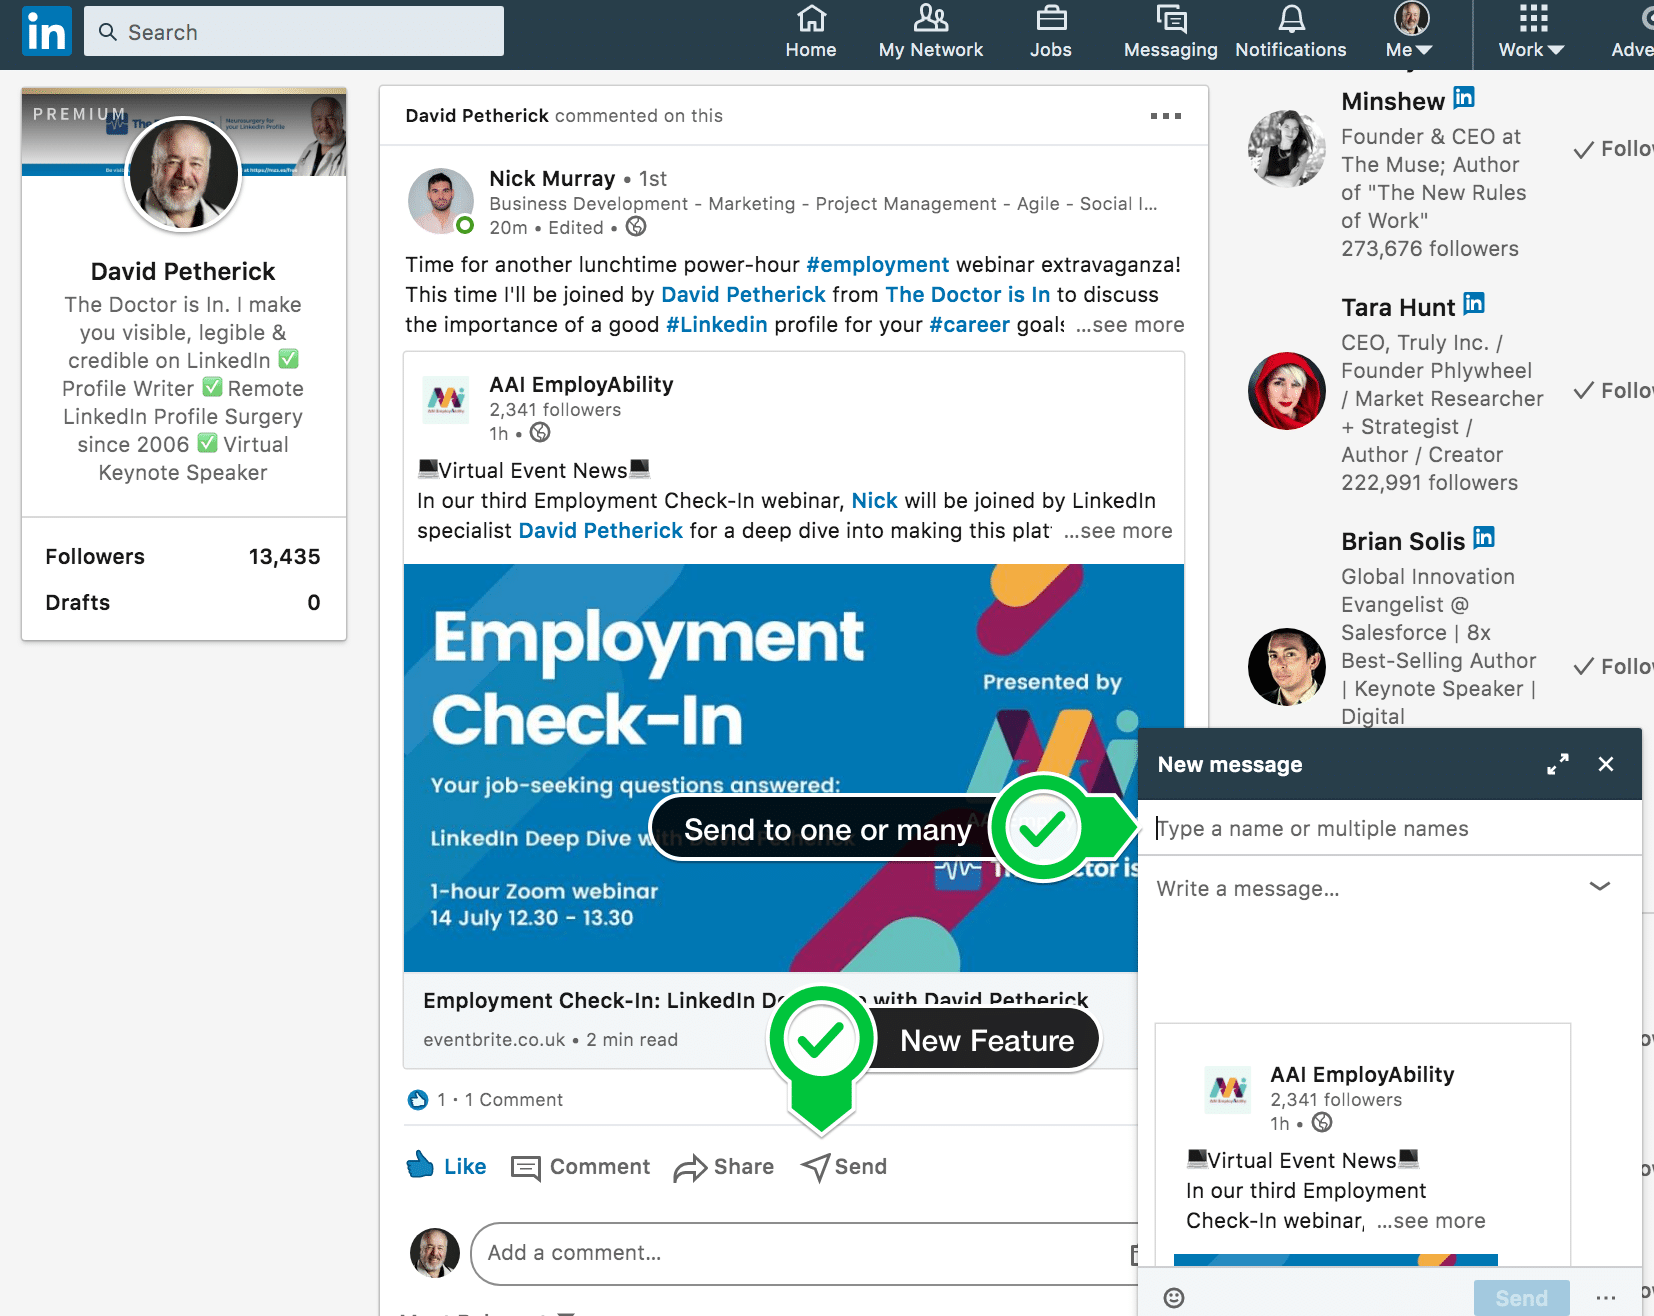 New 'Send' option to share updates on LinkedIn